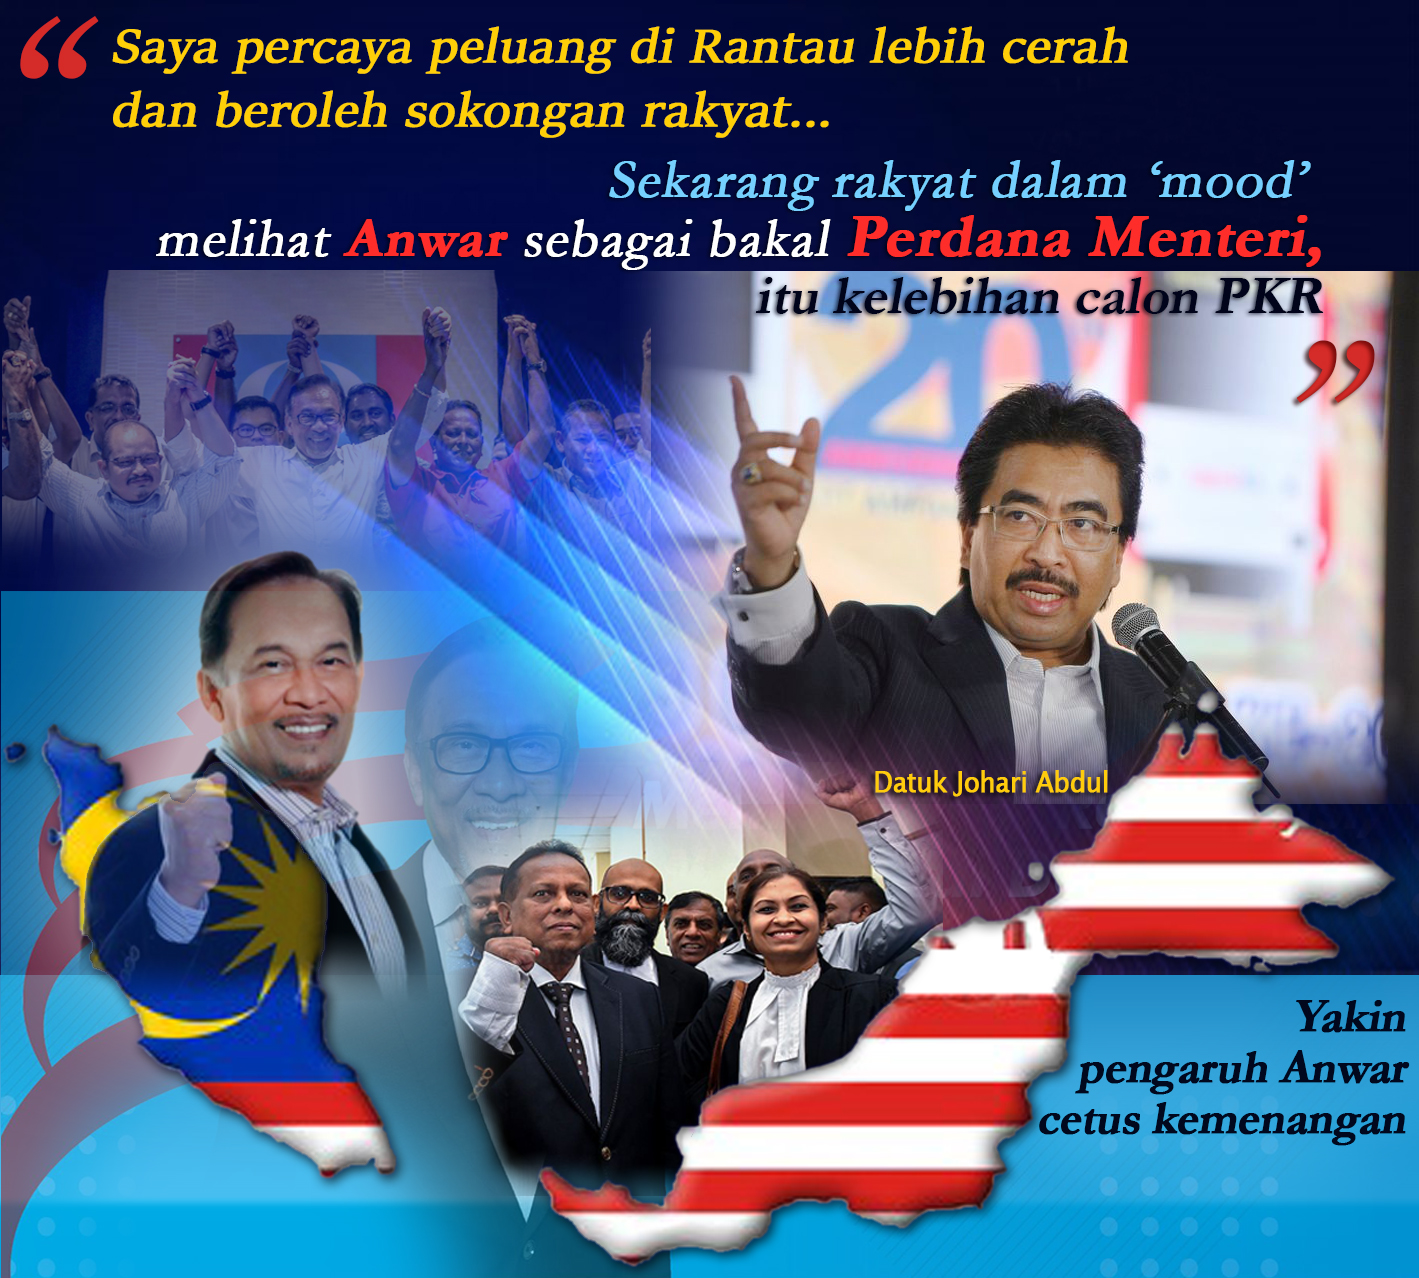 Datuk Johari Abdul_Anwar Ibrahim-PRK_Rantau